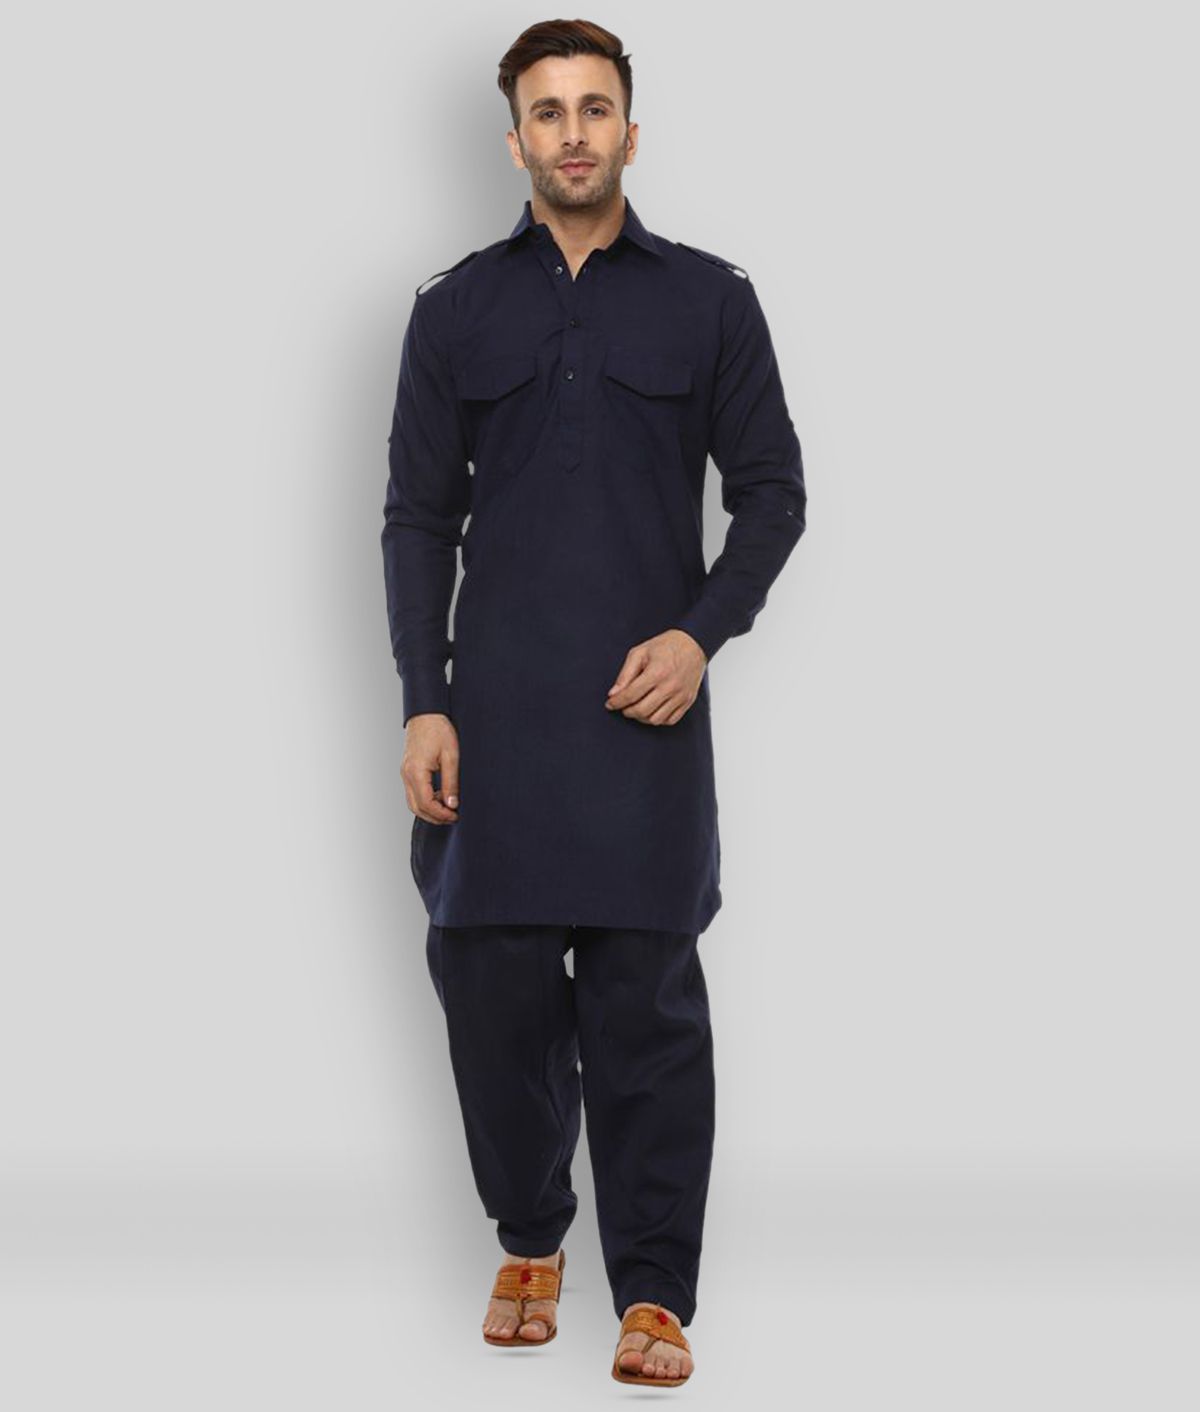     			Hangup - Navy Cotton Blend Regular Fit Men's Pathani Suit ( Pack of 1 )